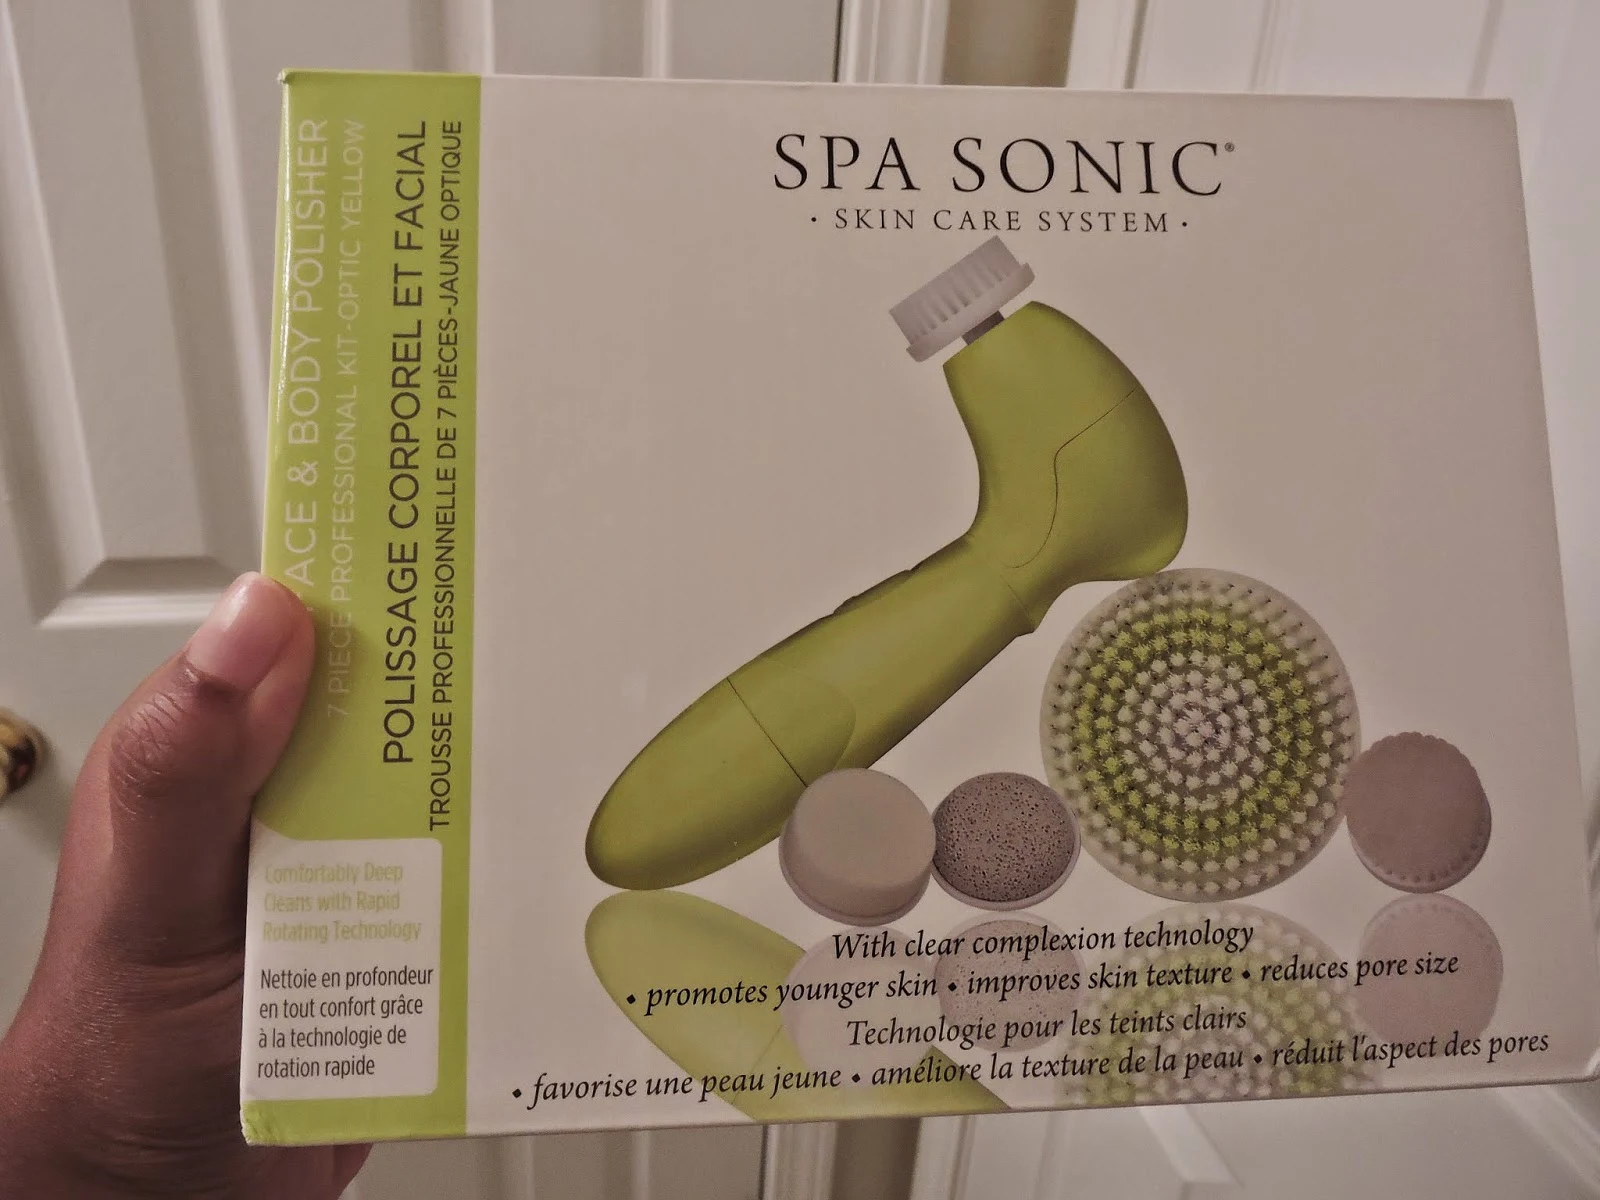 Spa Sonic Skin Care System Review #SpaSonic via www.Productreviewmom.com